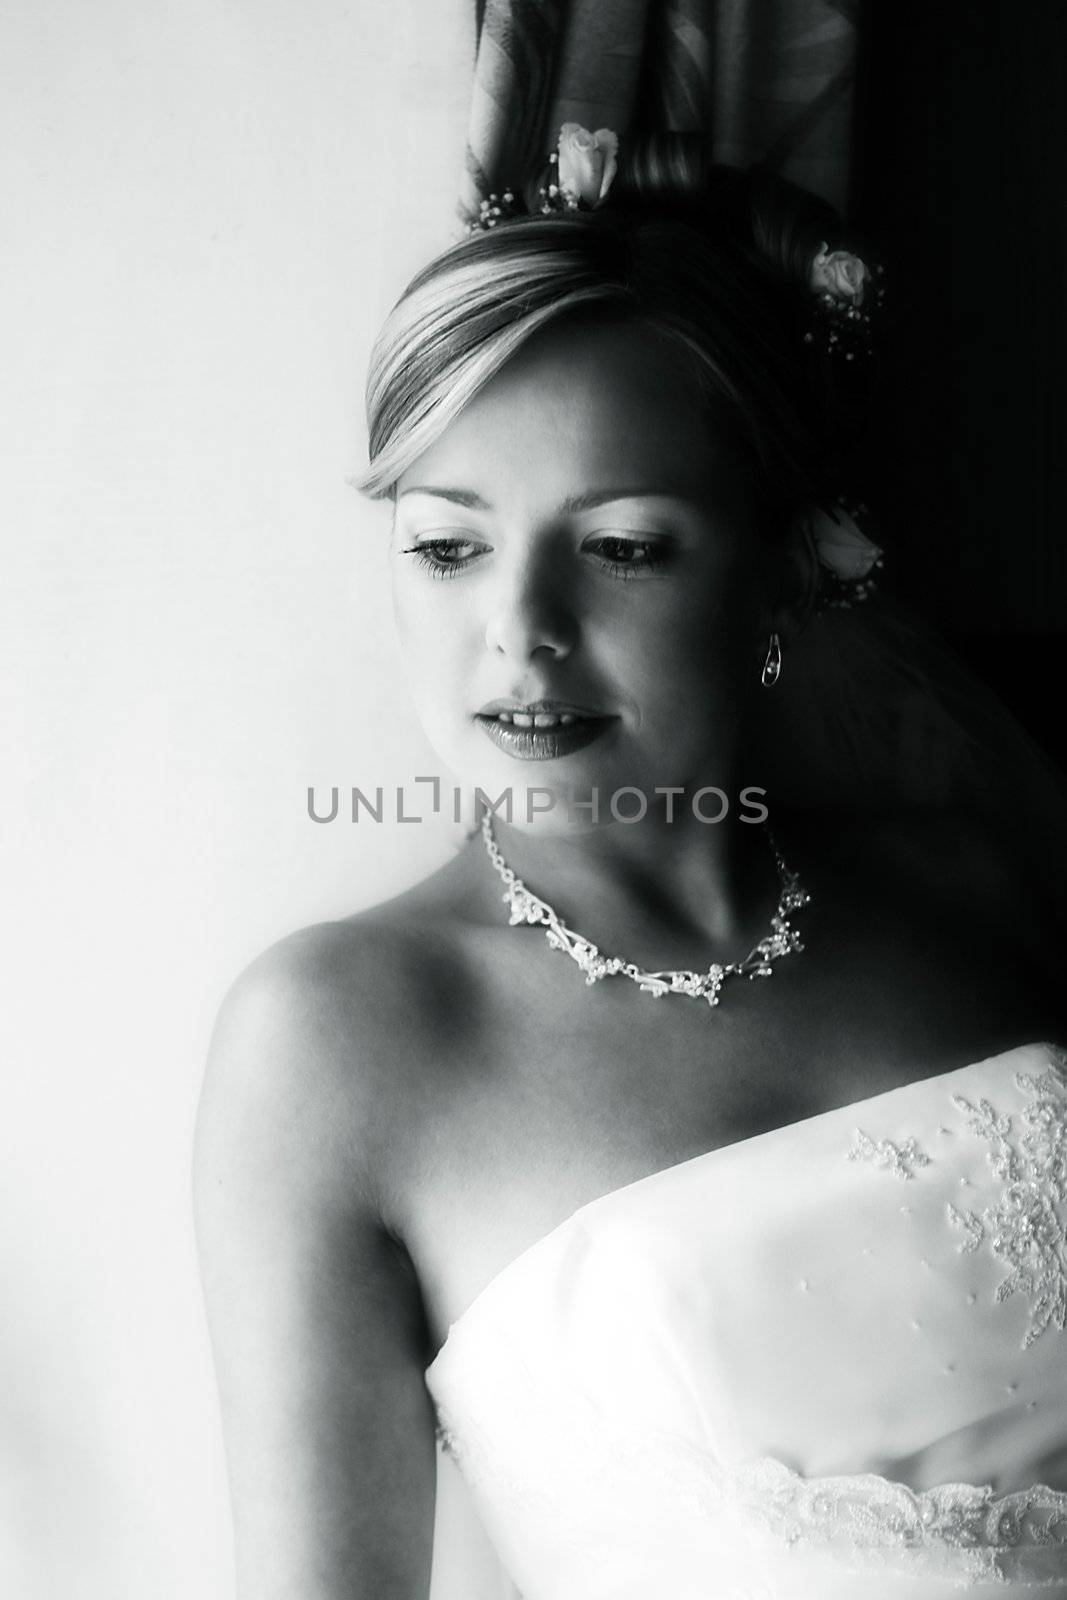 Portrait of the smiling beautiful bride. b/w+blue tone